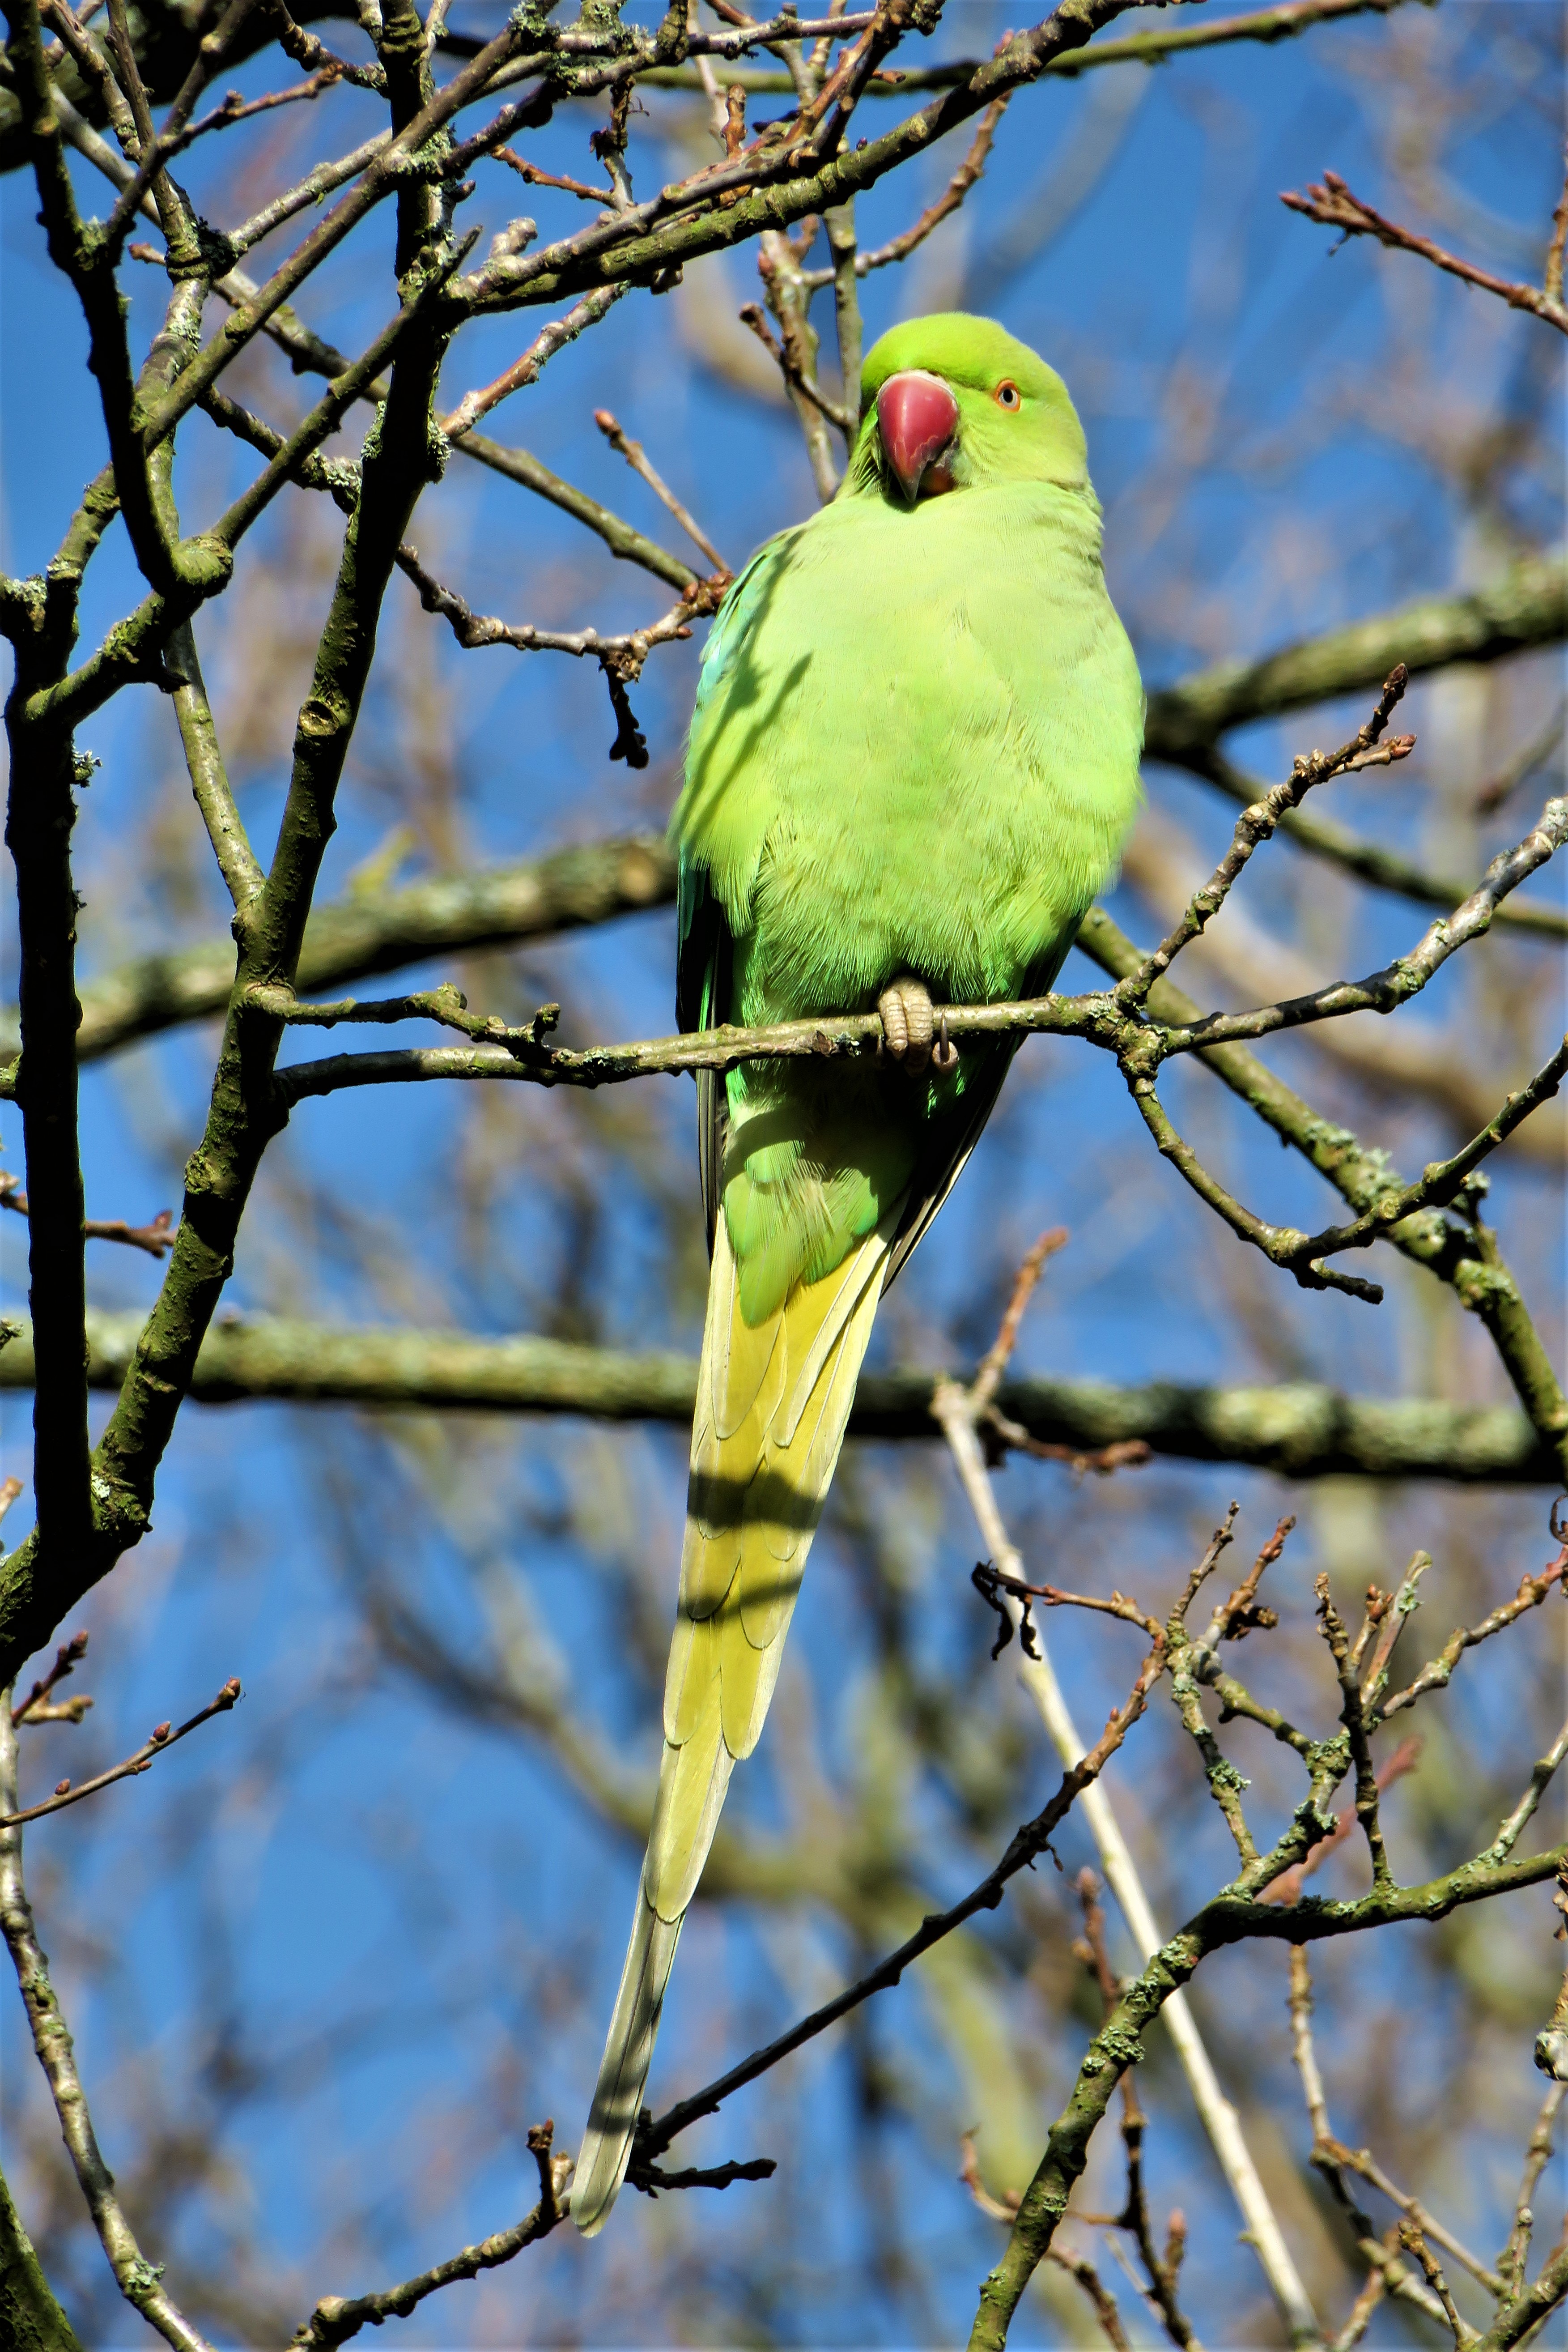 Halsbandparkiet - ook broedvogel in Meijendel